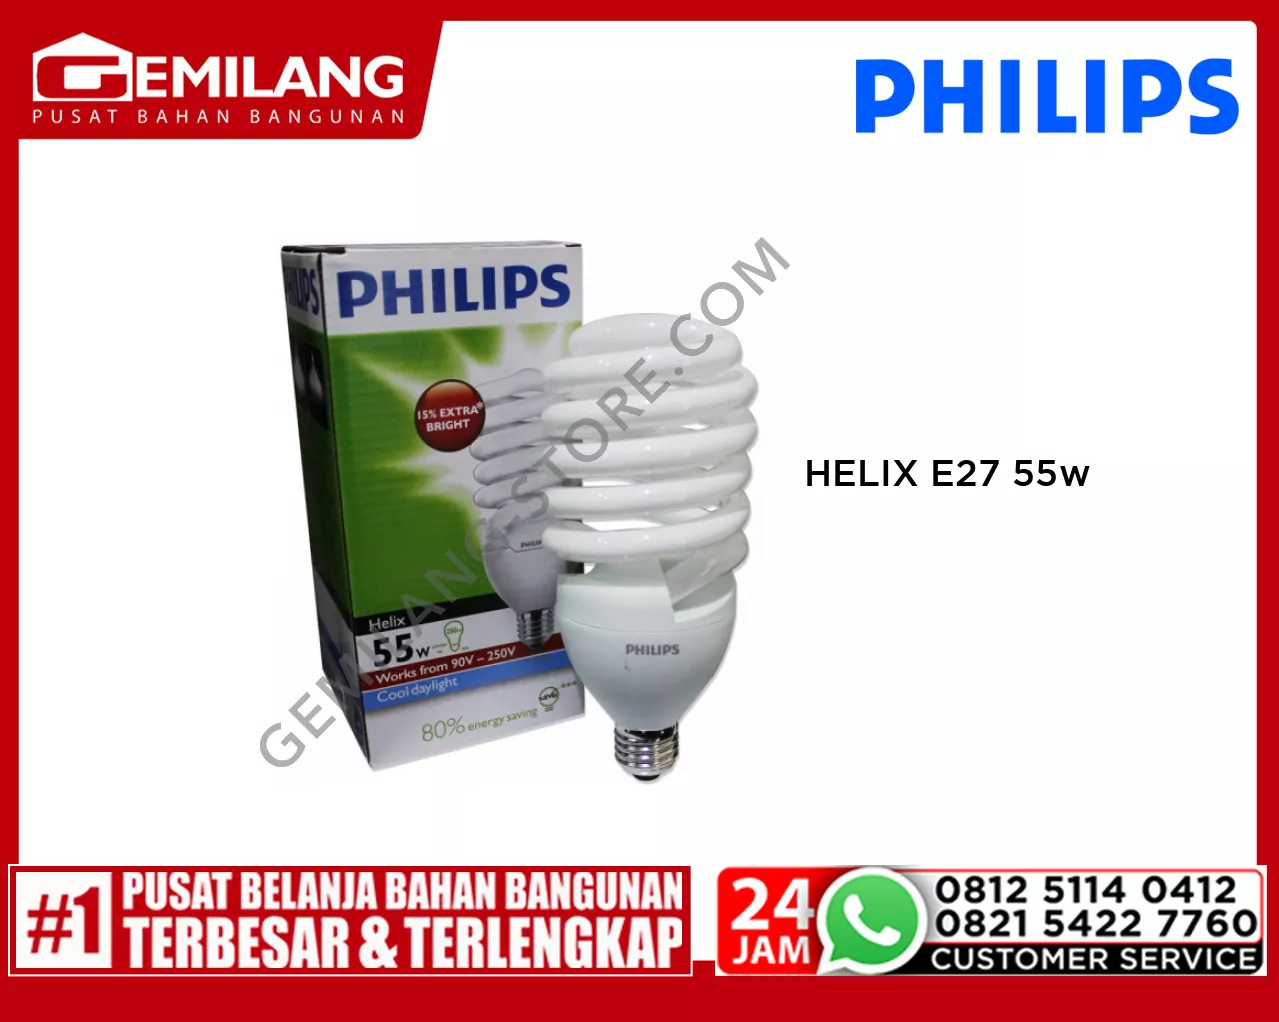 PHILIPS HELIX CDL E27 55w